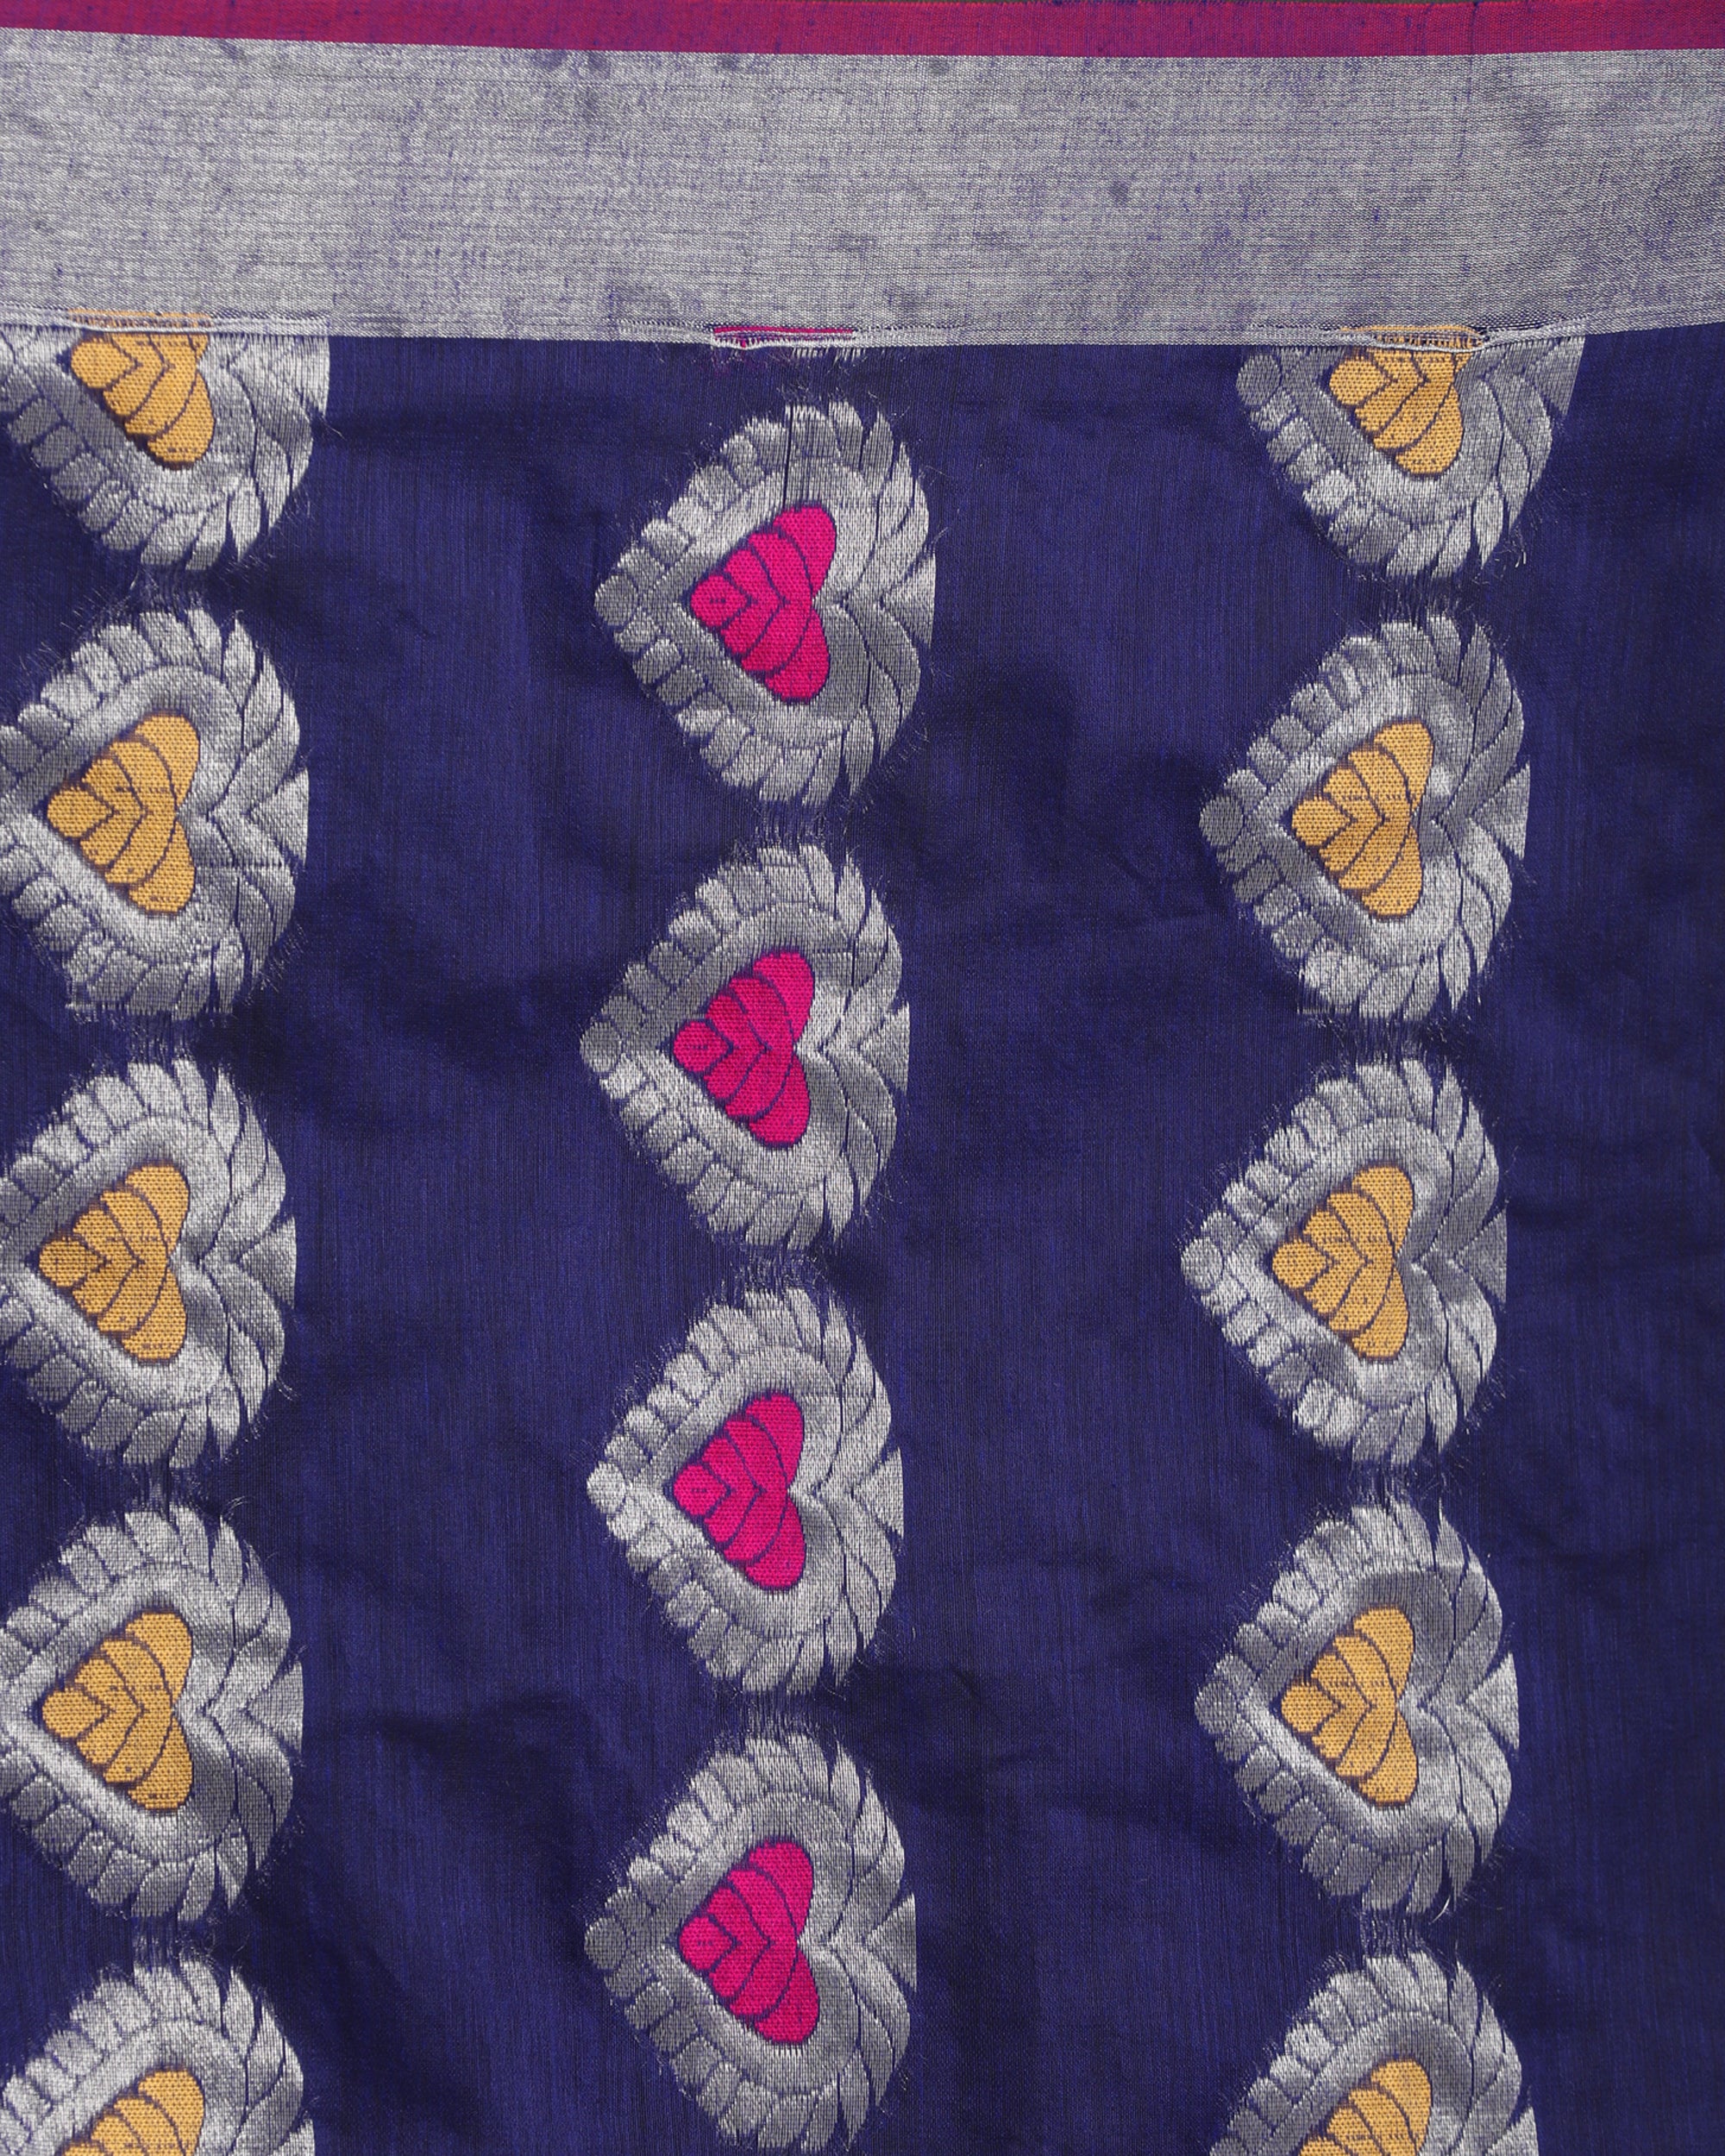 Women's Royal Blue Cotton Blend Handloom Jamdani Saree - Angoshobha